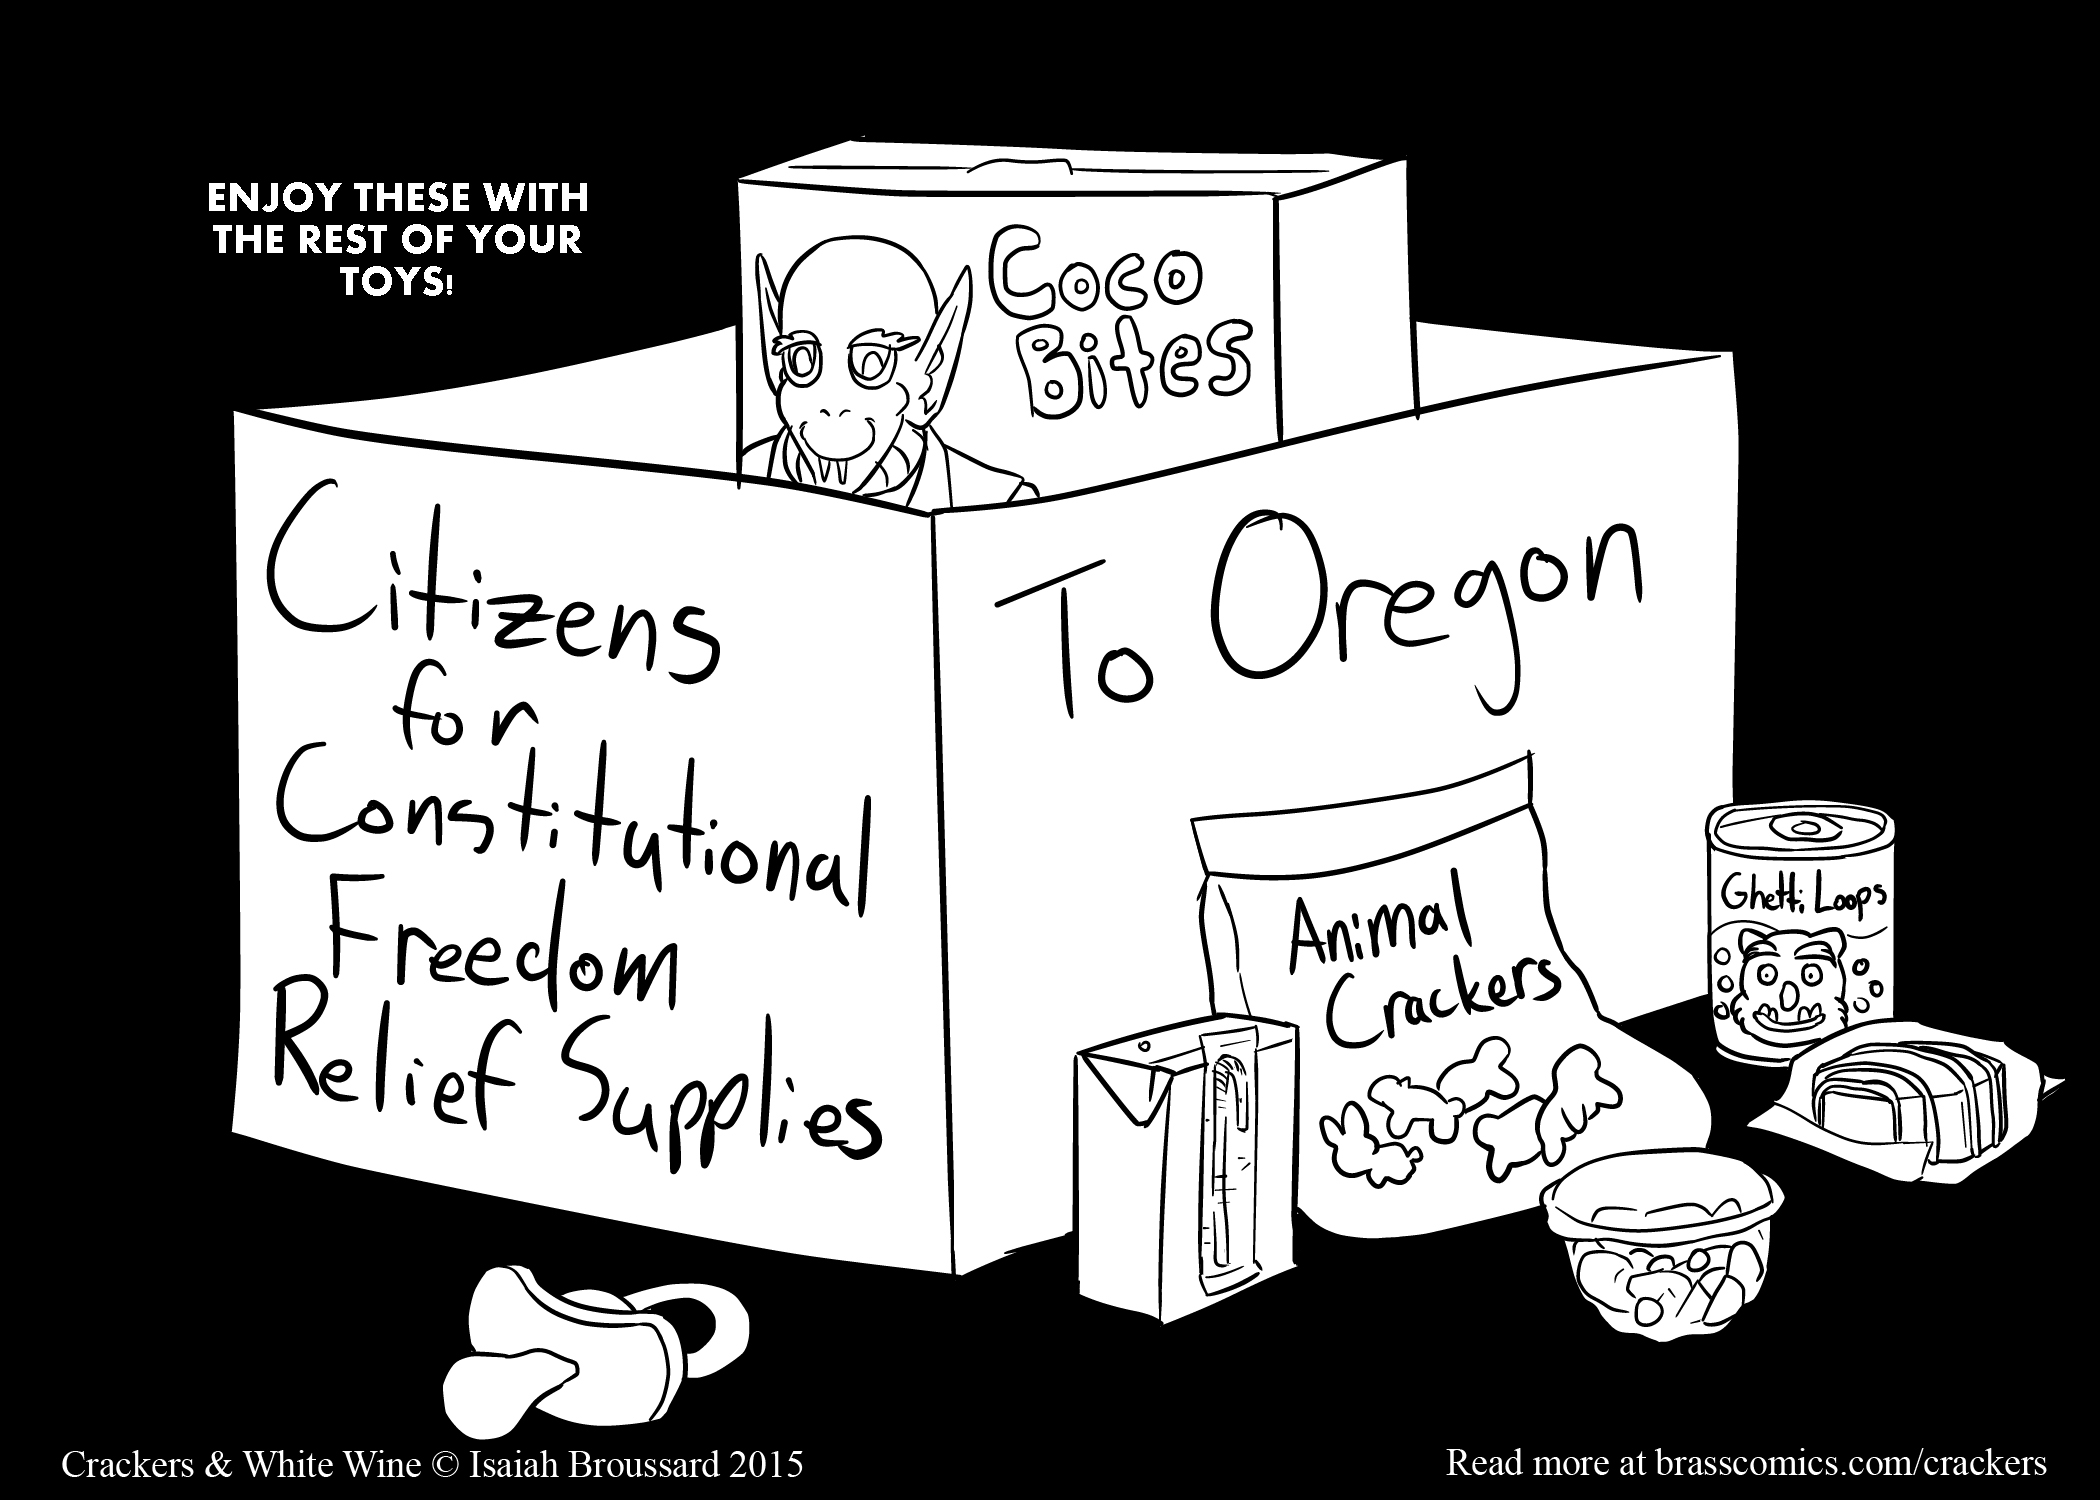 Oregon Militia